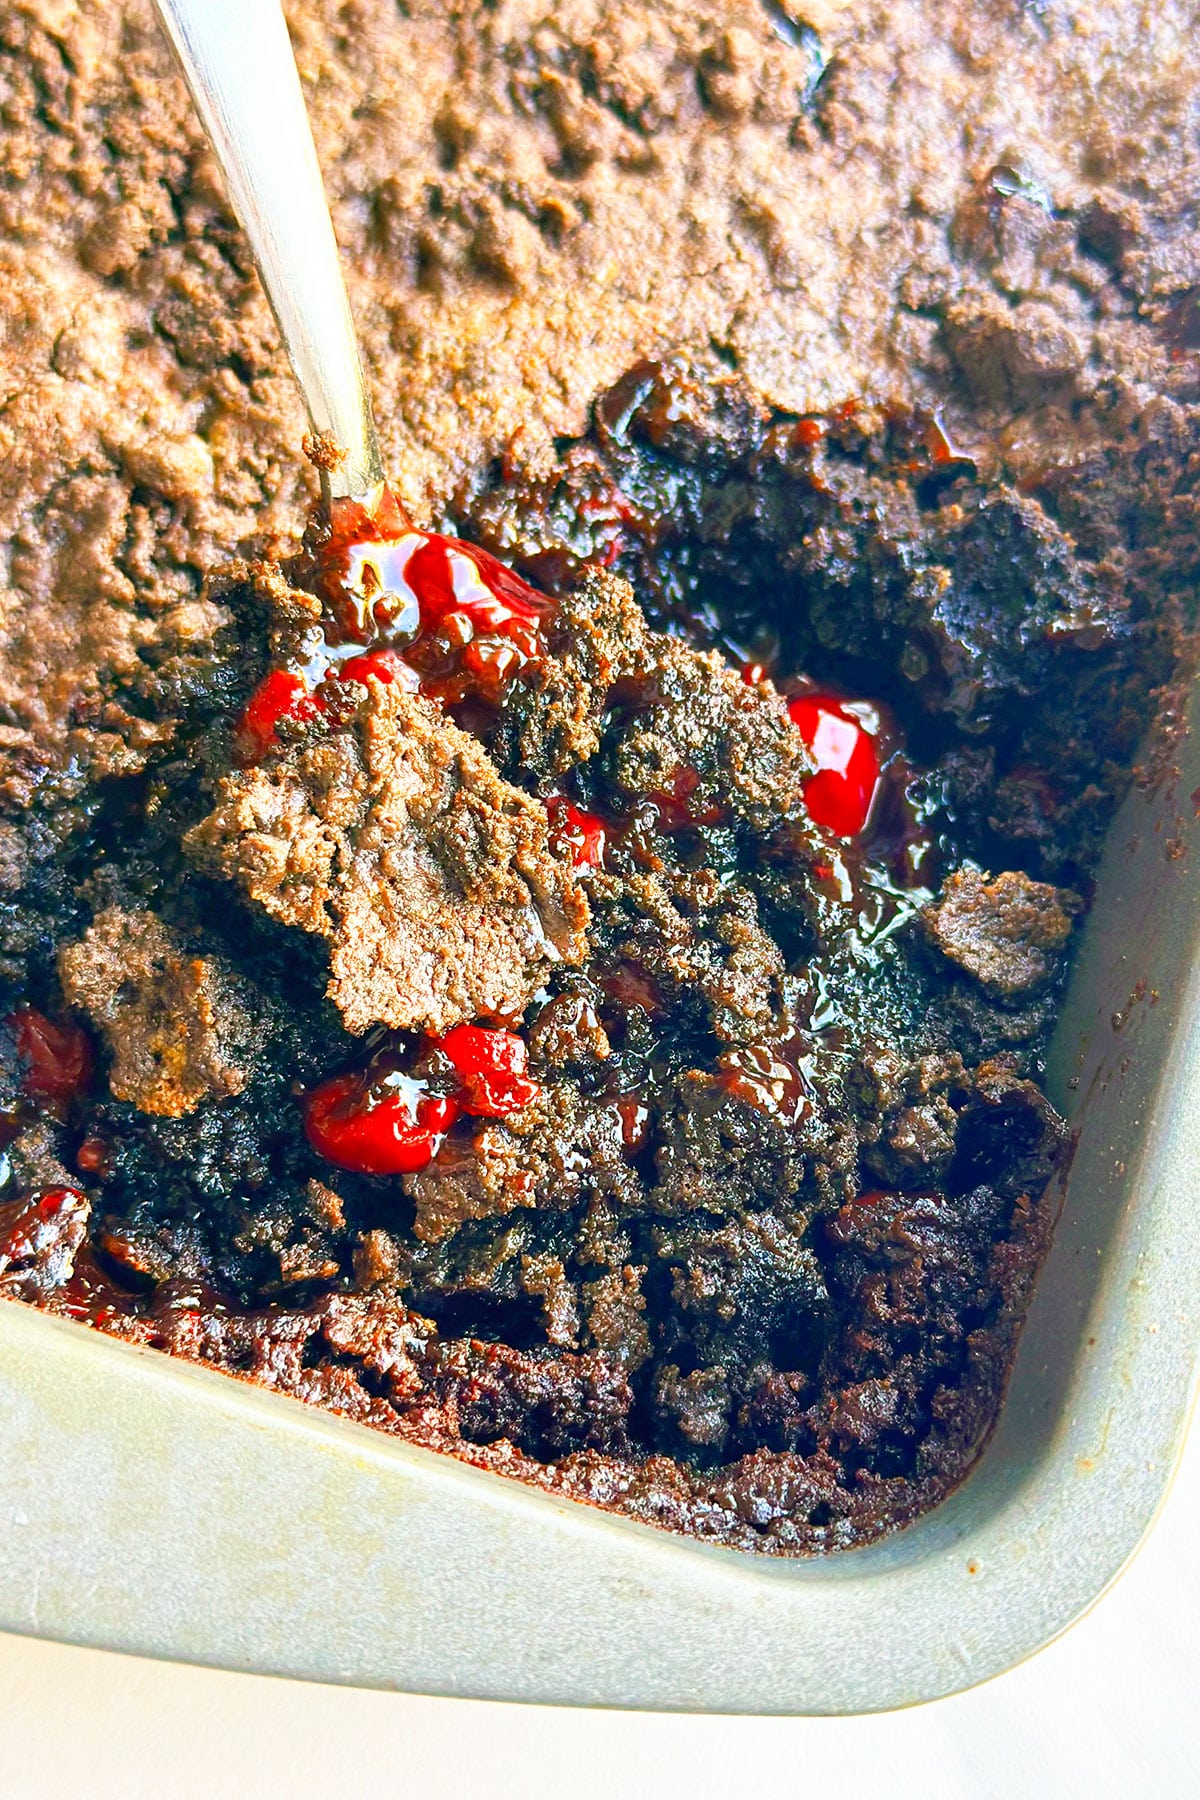 Spoonful of Cherry Dump Cake in Baking Pan- Closeup Shot